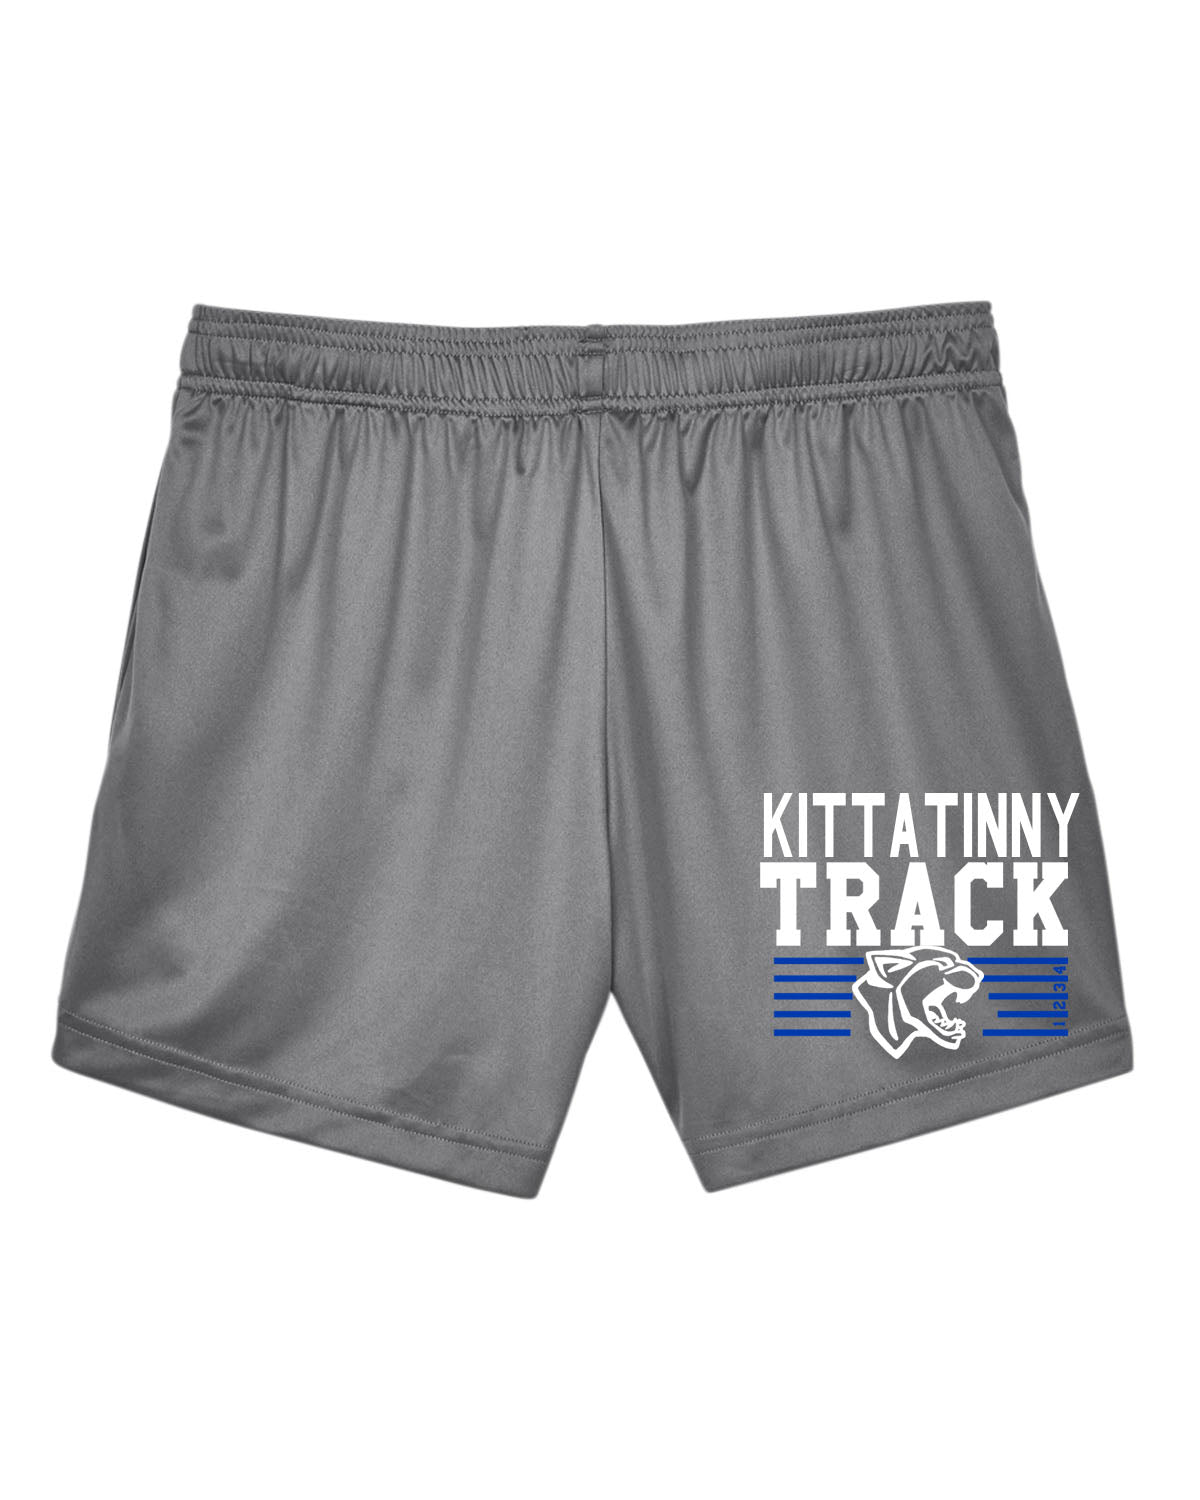 Kittatinny Track Ladies Performance Design 5 Shorts